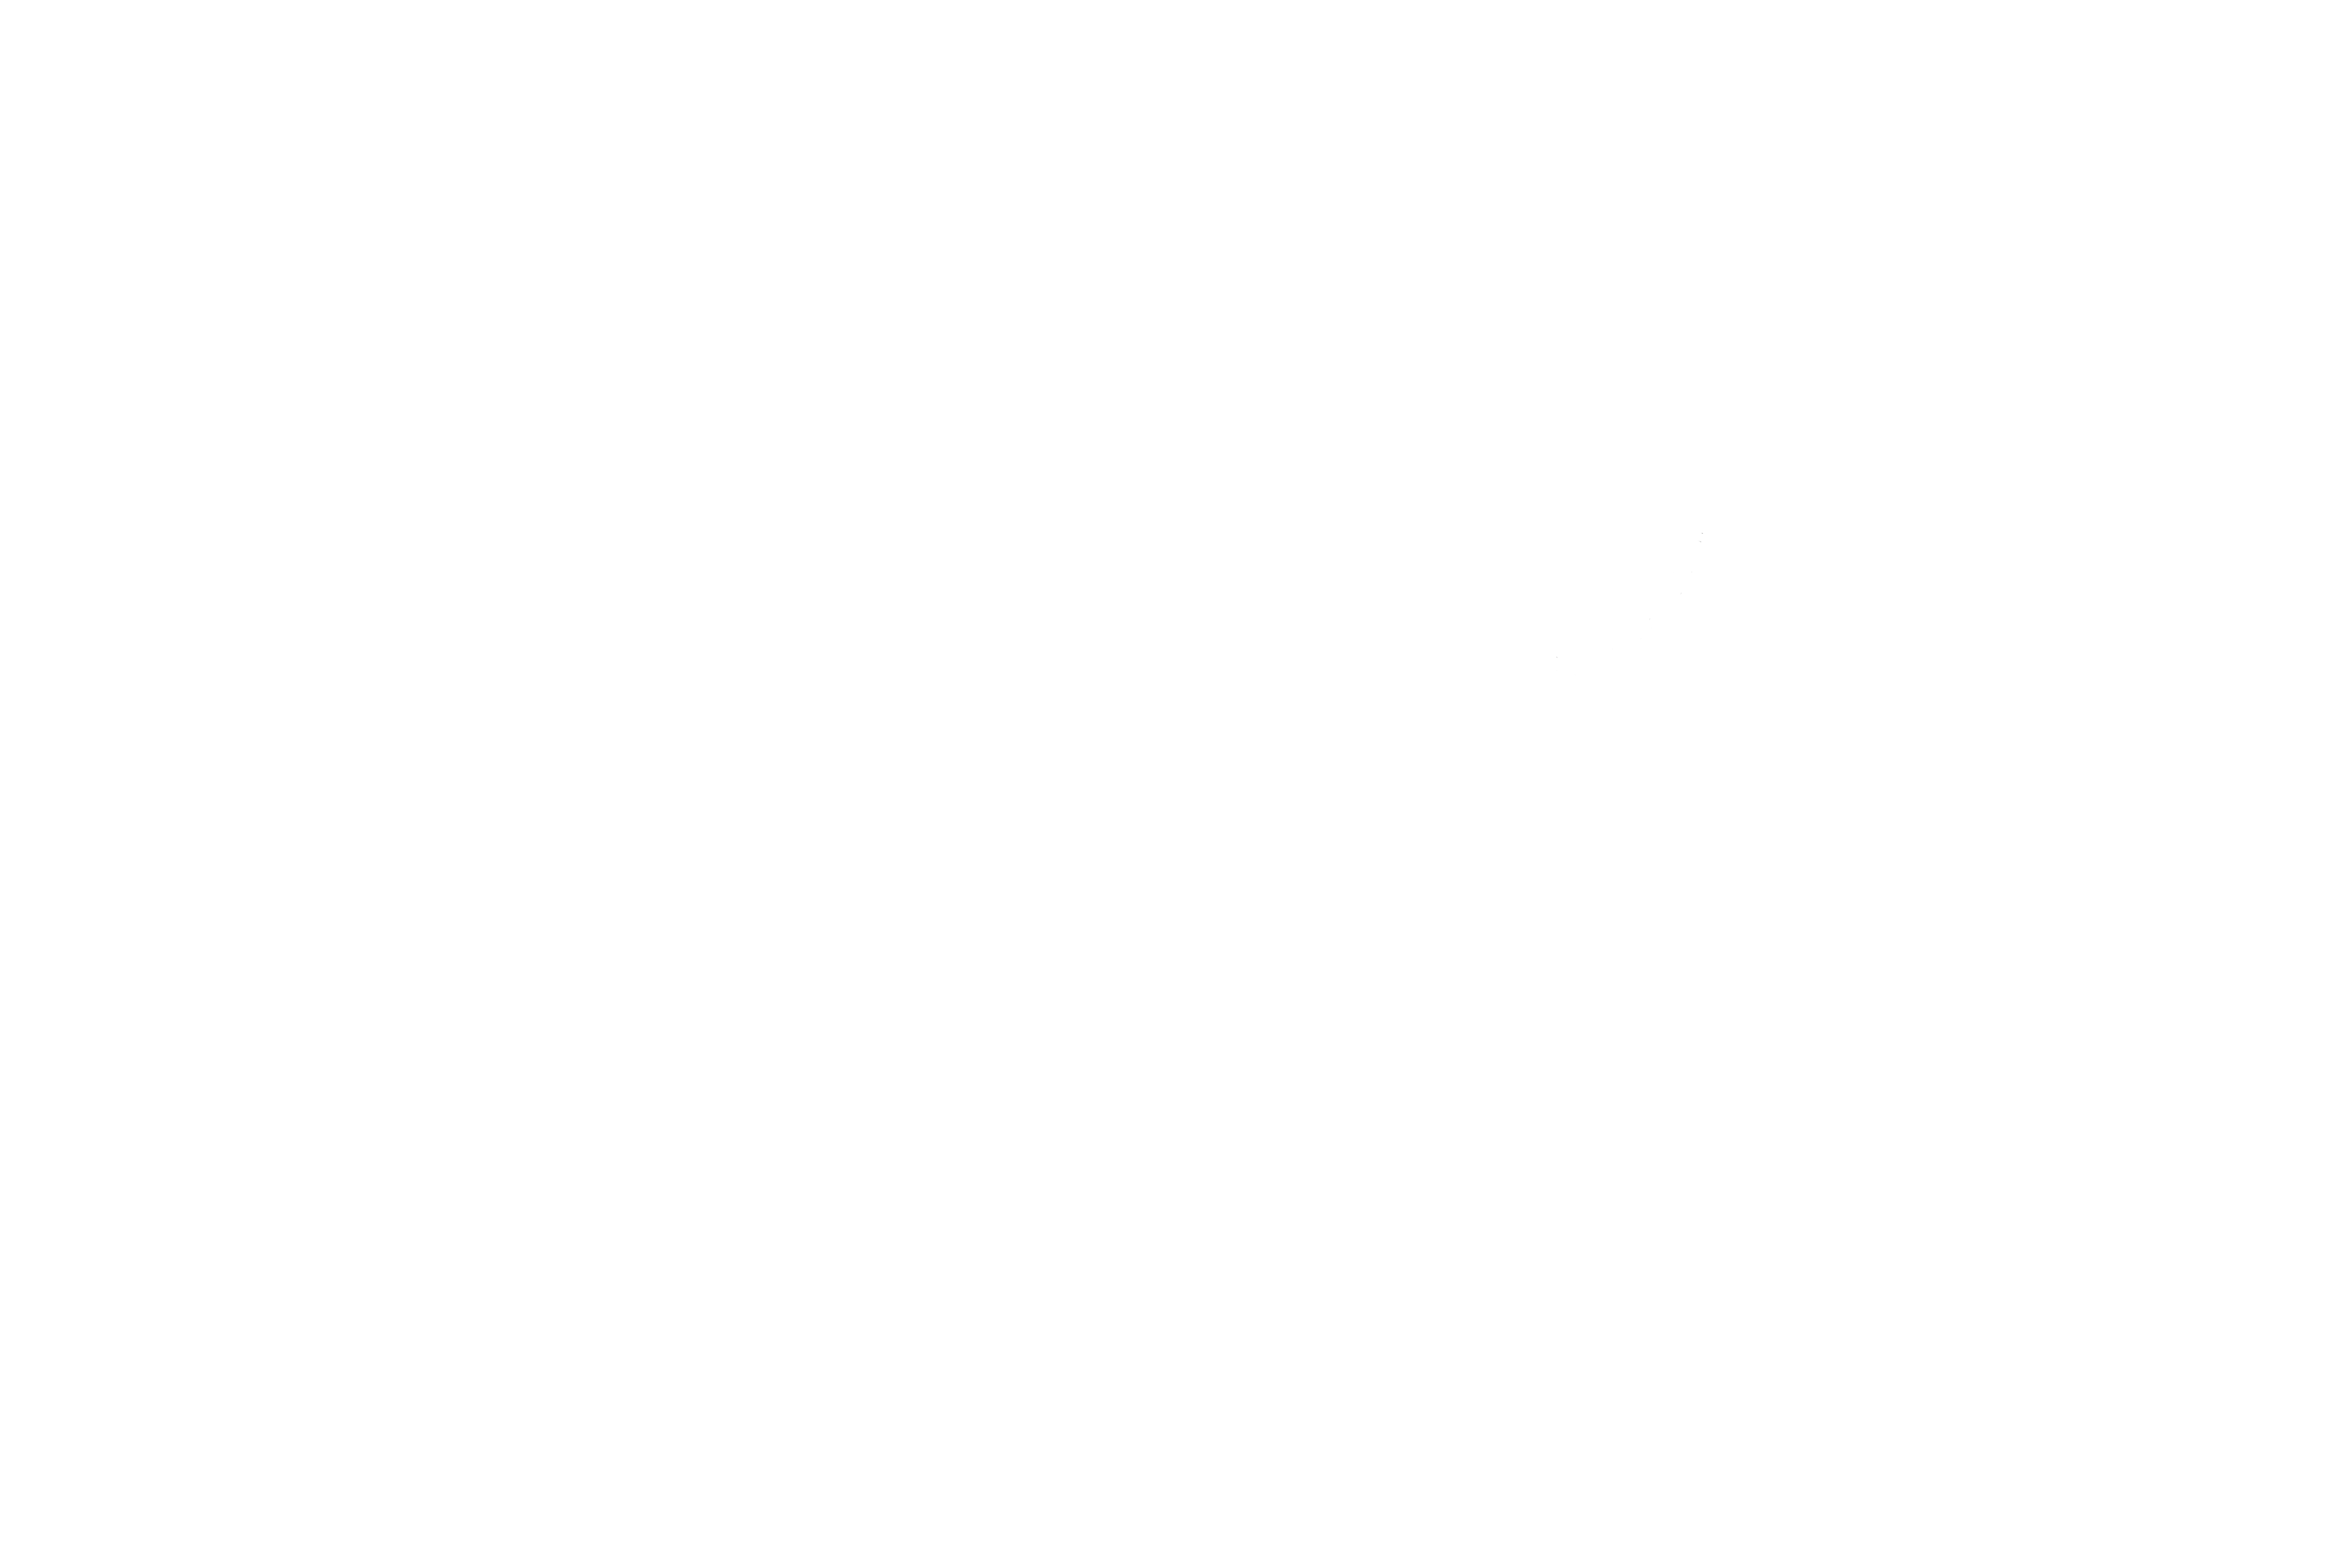 Peter Verdnik Photography